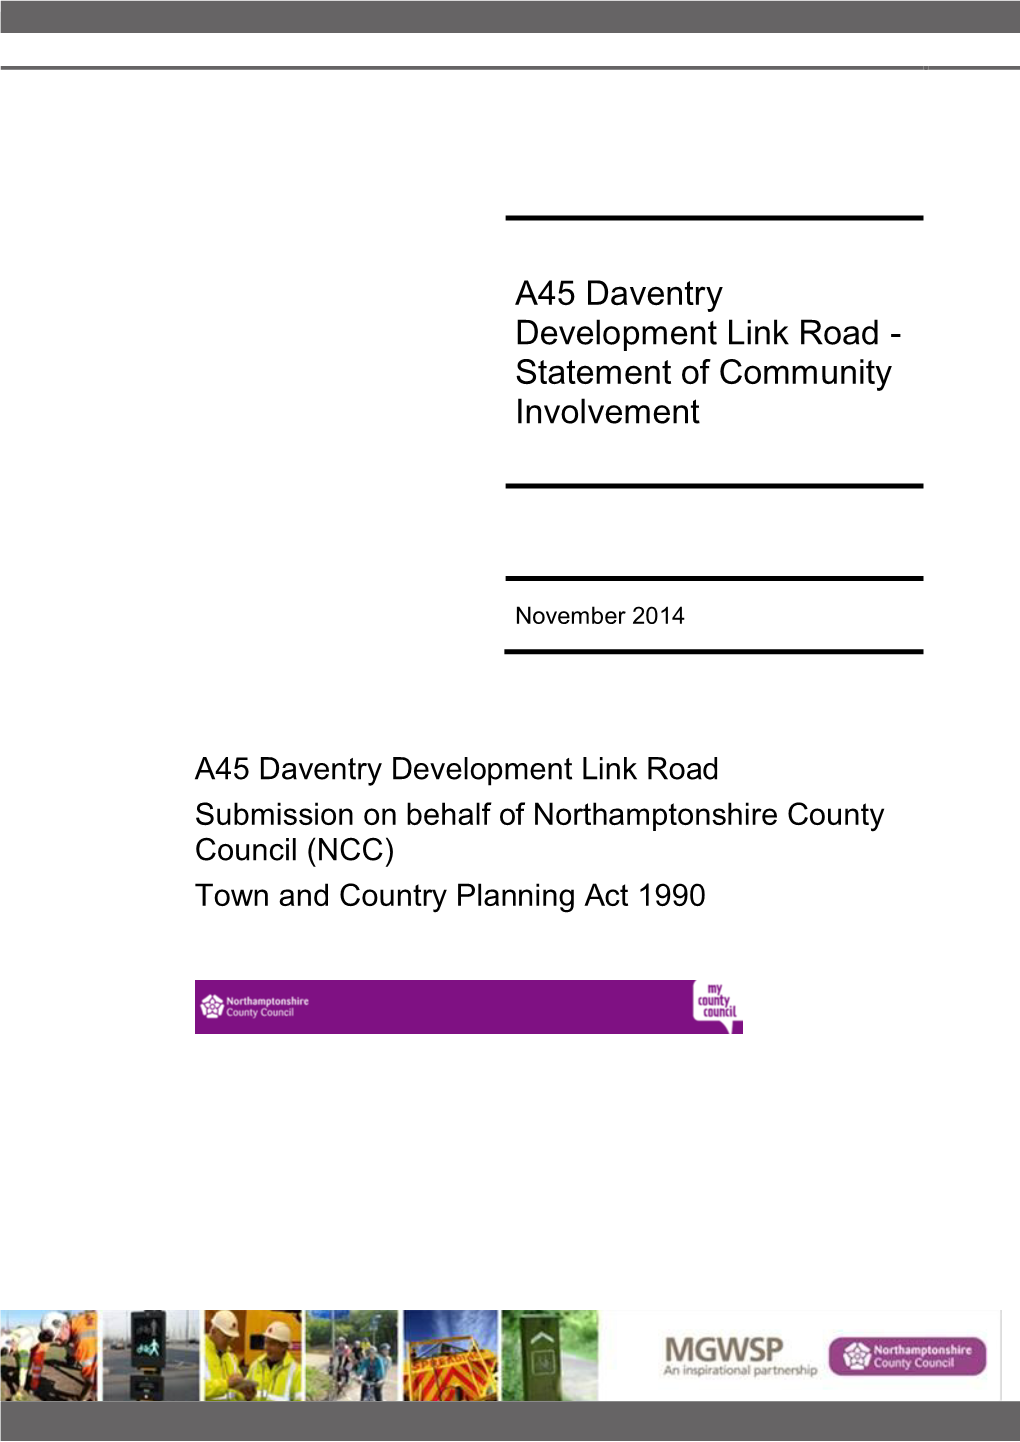 A45 Daventry Development Link Road - Statement of Community Involvement